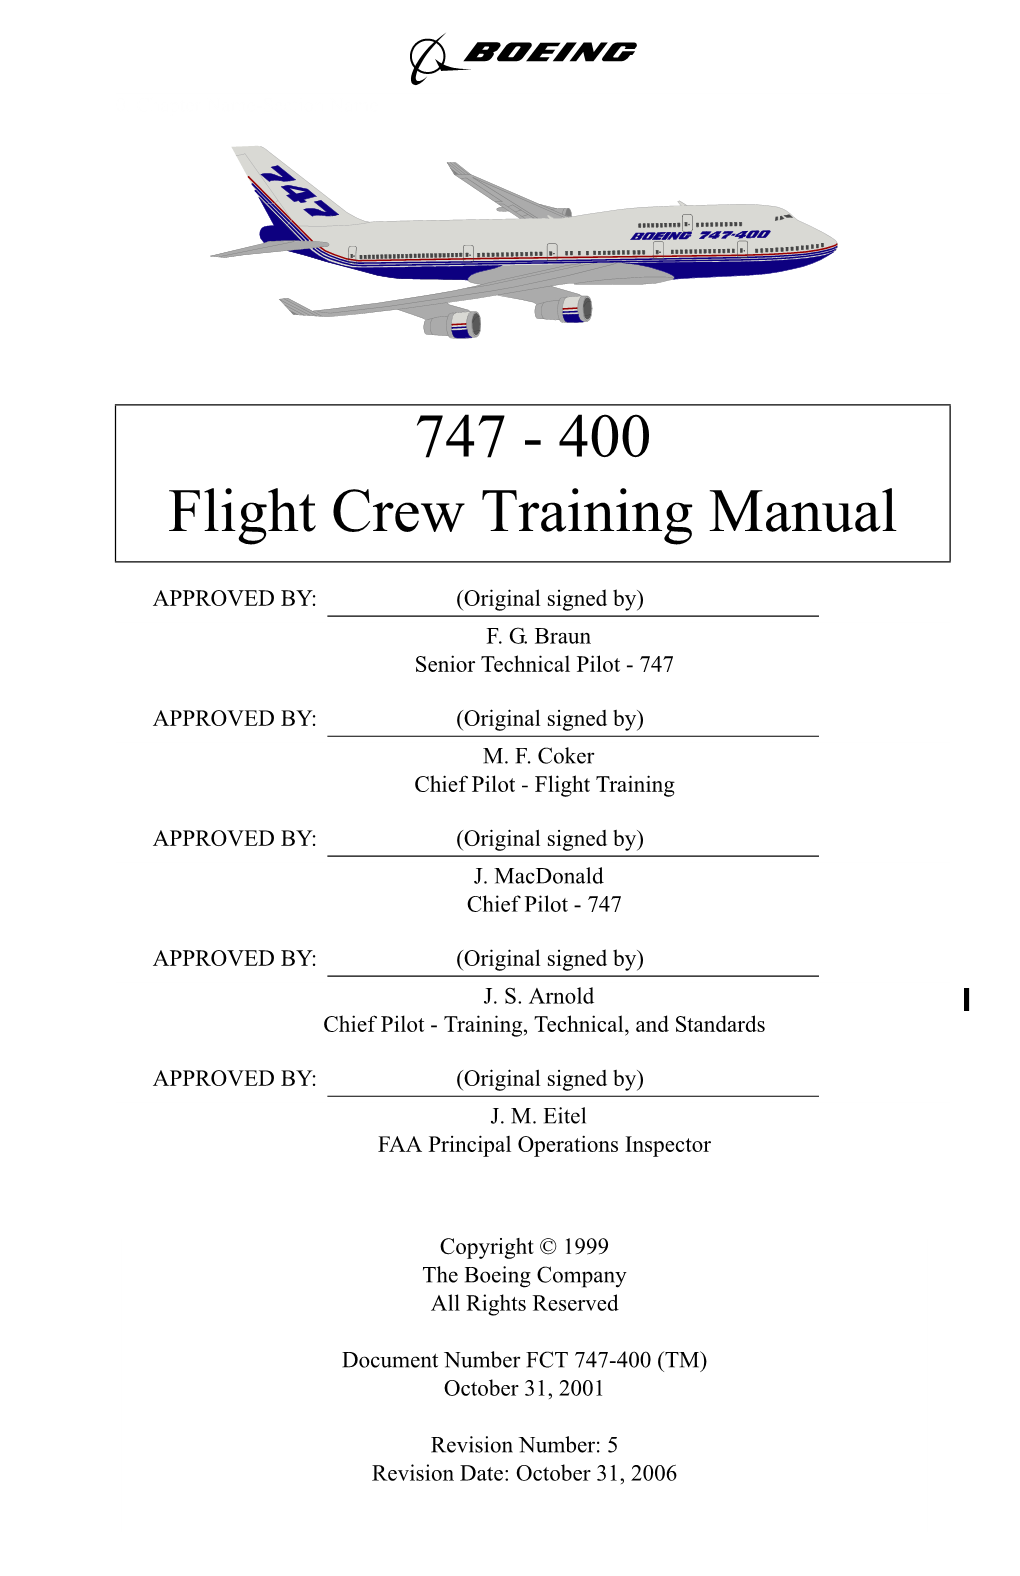 747 - 400 Flight Crew Training Manual